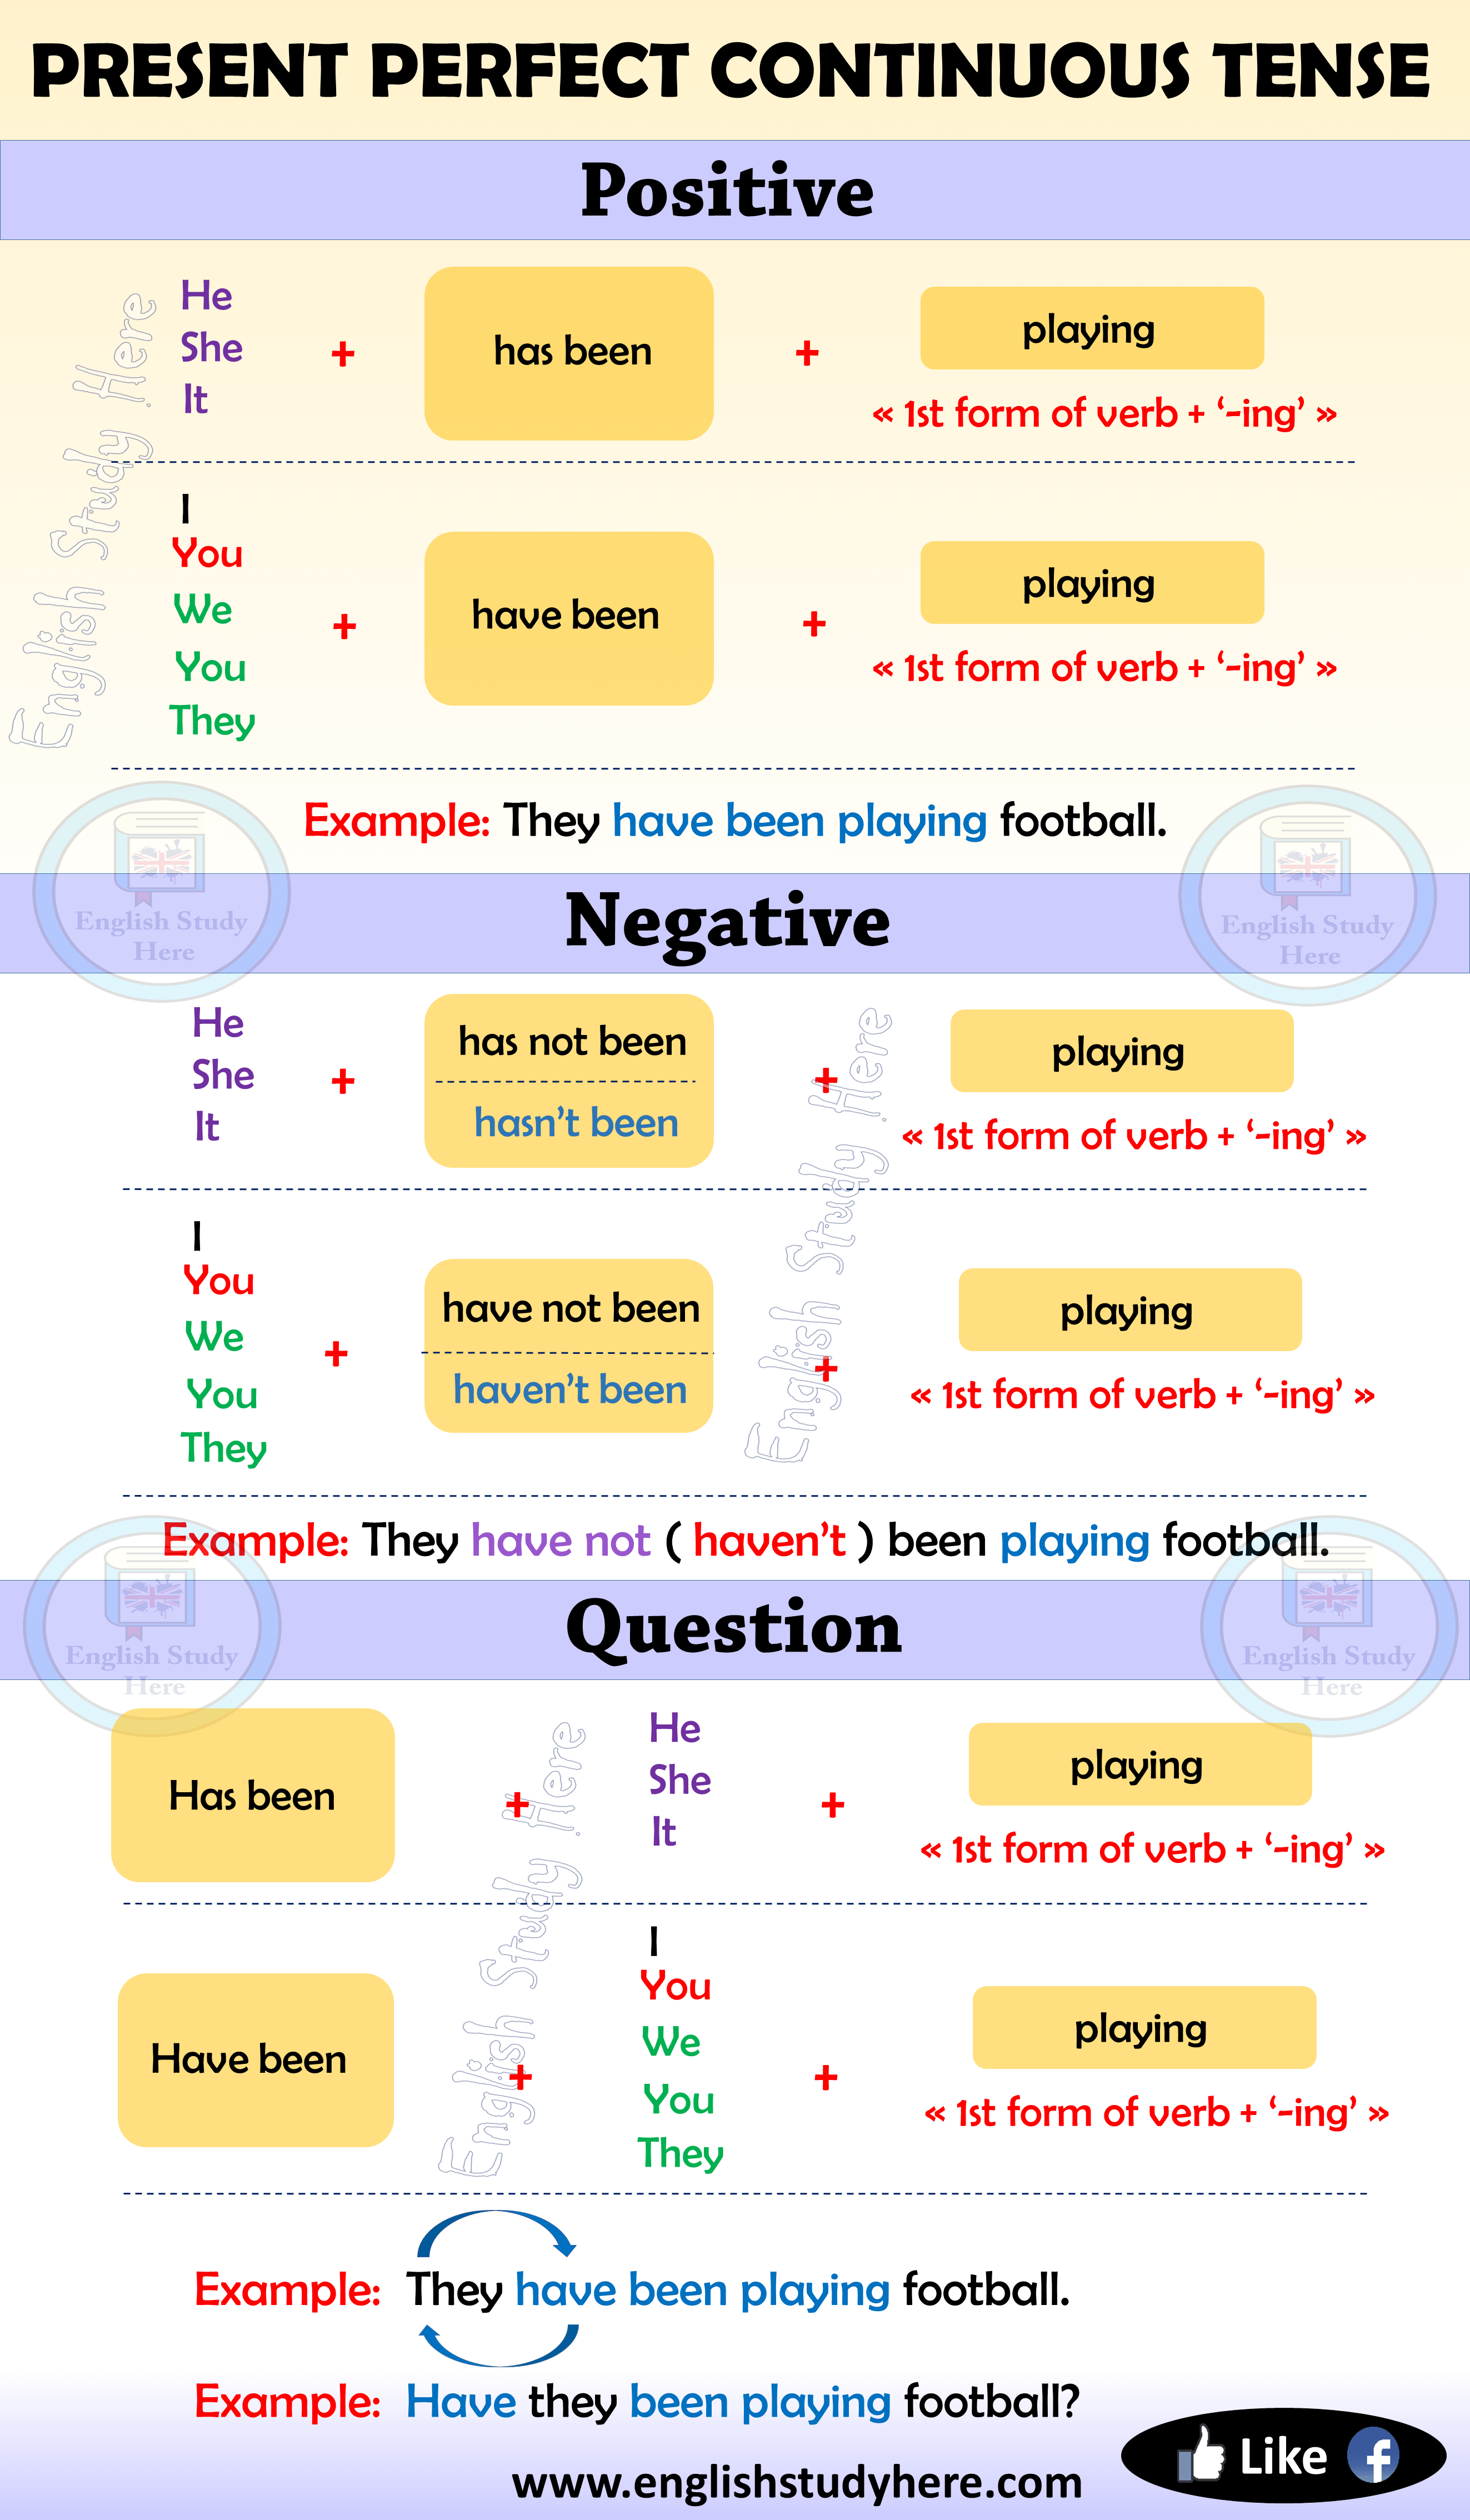 english grammar tense formula